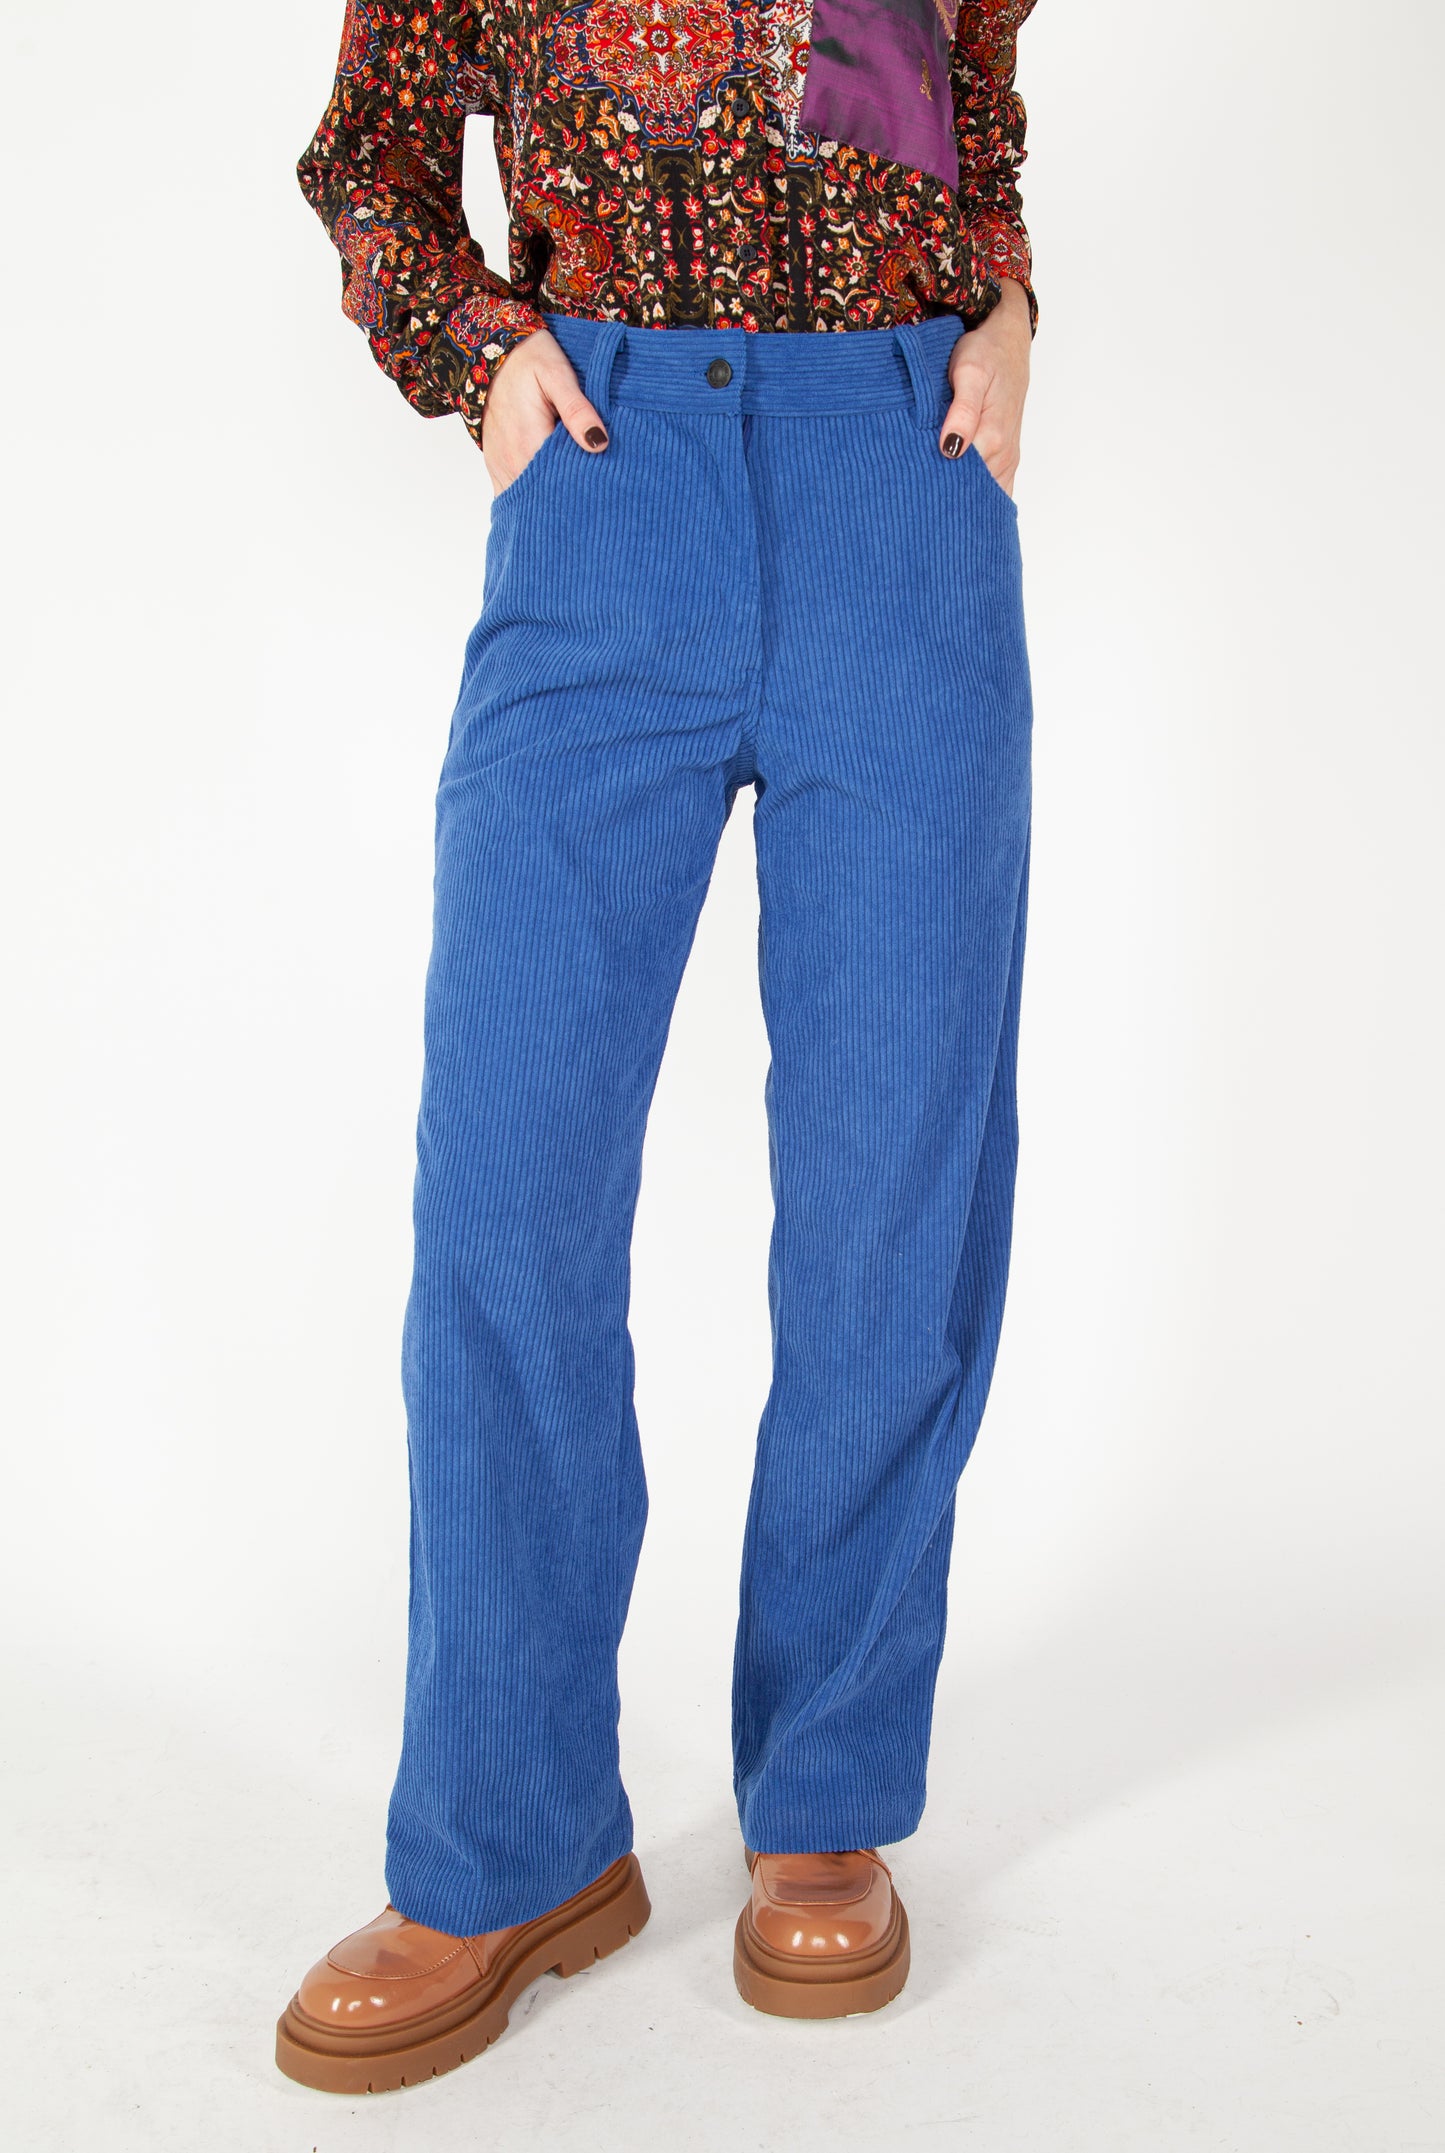 Pantalon Matiz Azul